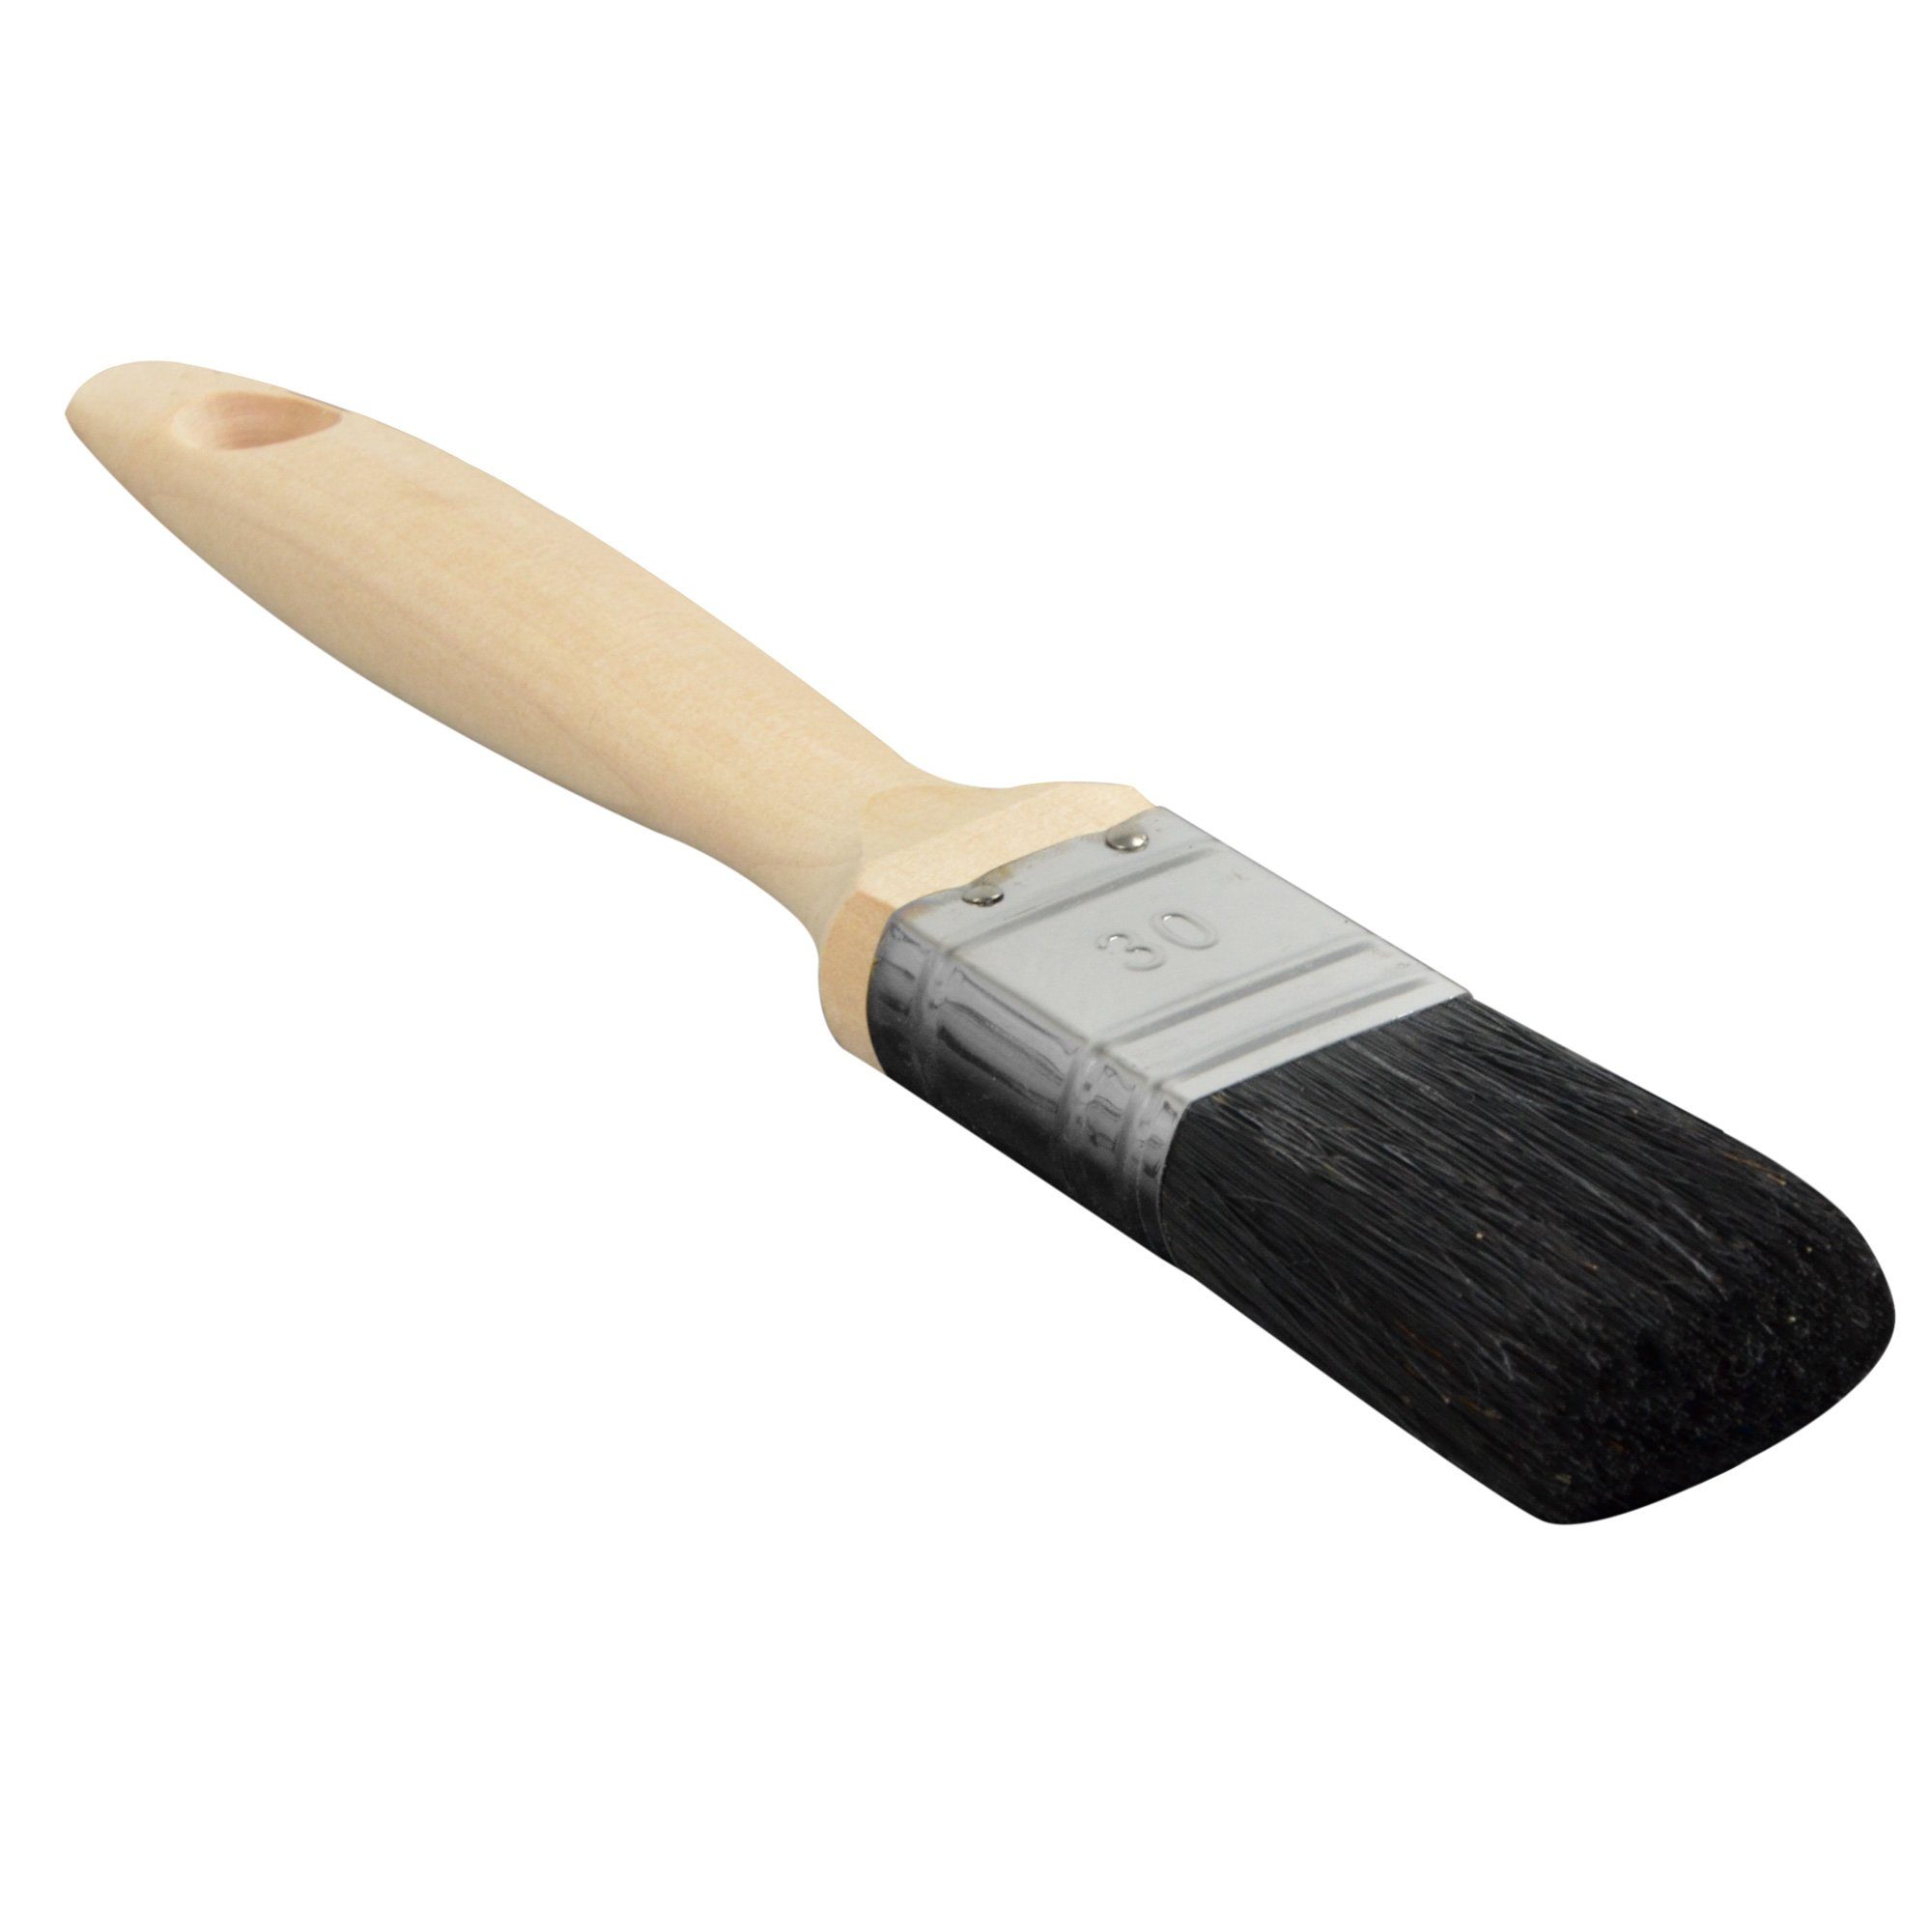 9. Naturborste Flachpinsel Malerpinsel 80% BLACKLINE 30 Tops Scorprotect® mm Flachpinsel Stärke